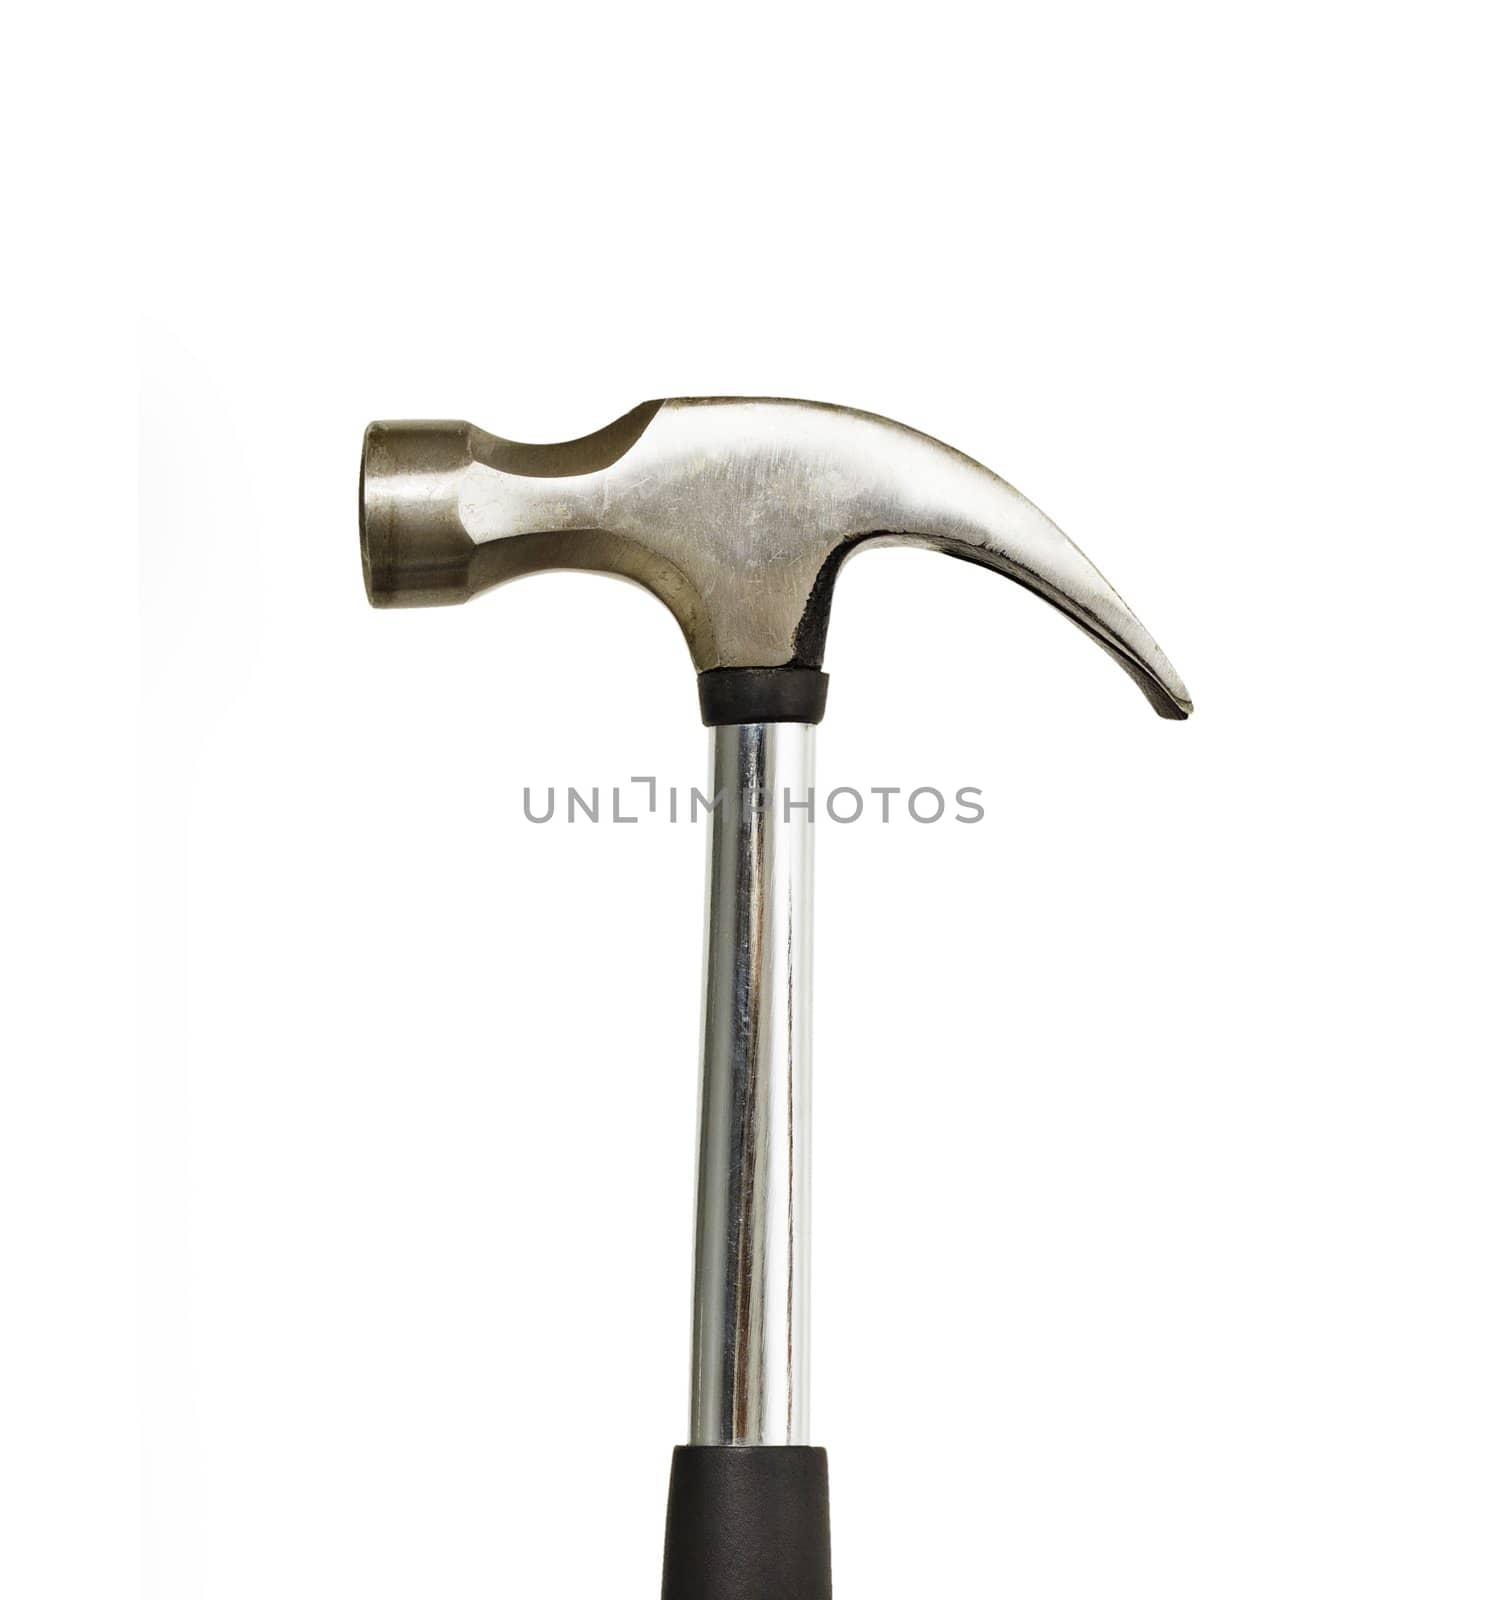 Hammer isolated